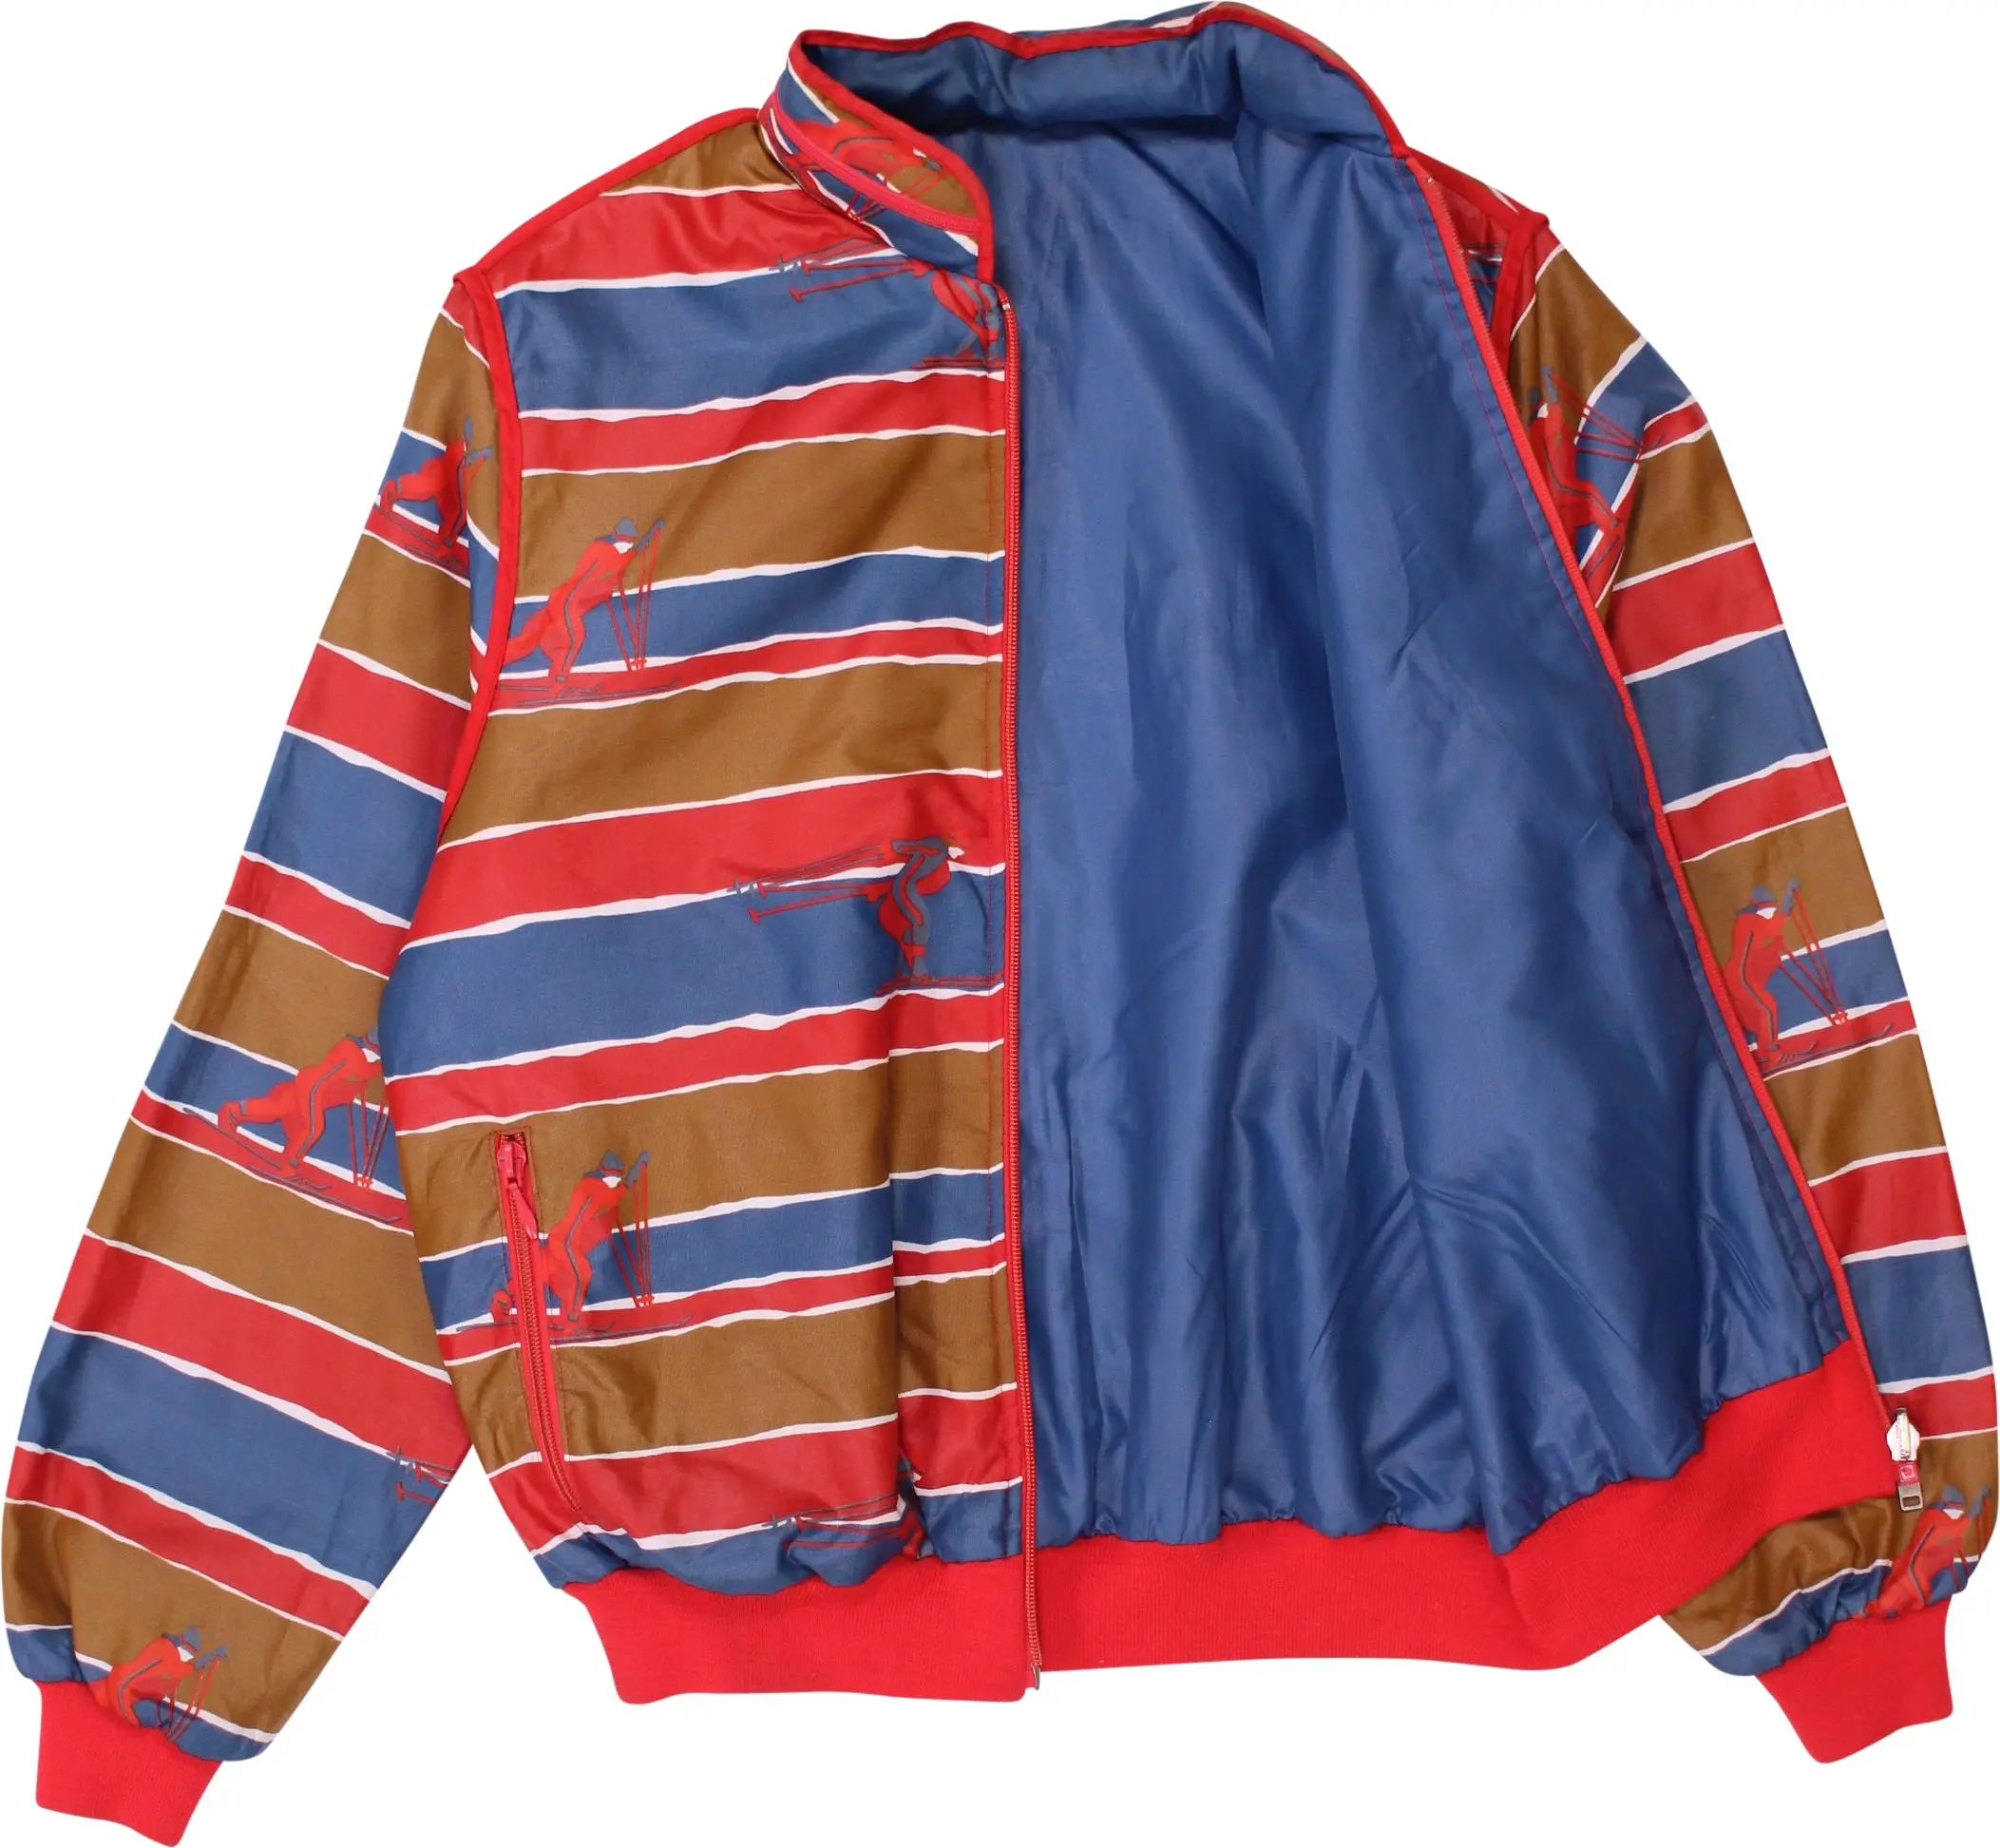 Golden Cup - Reversible Ski Print Jacket- ThriftTale.com - Vintage and second handclothing